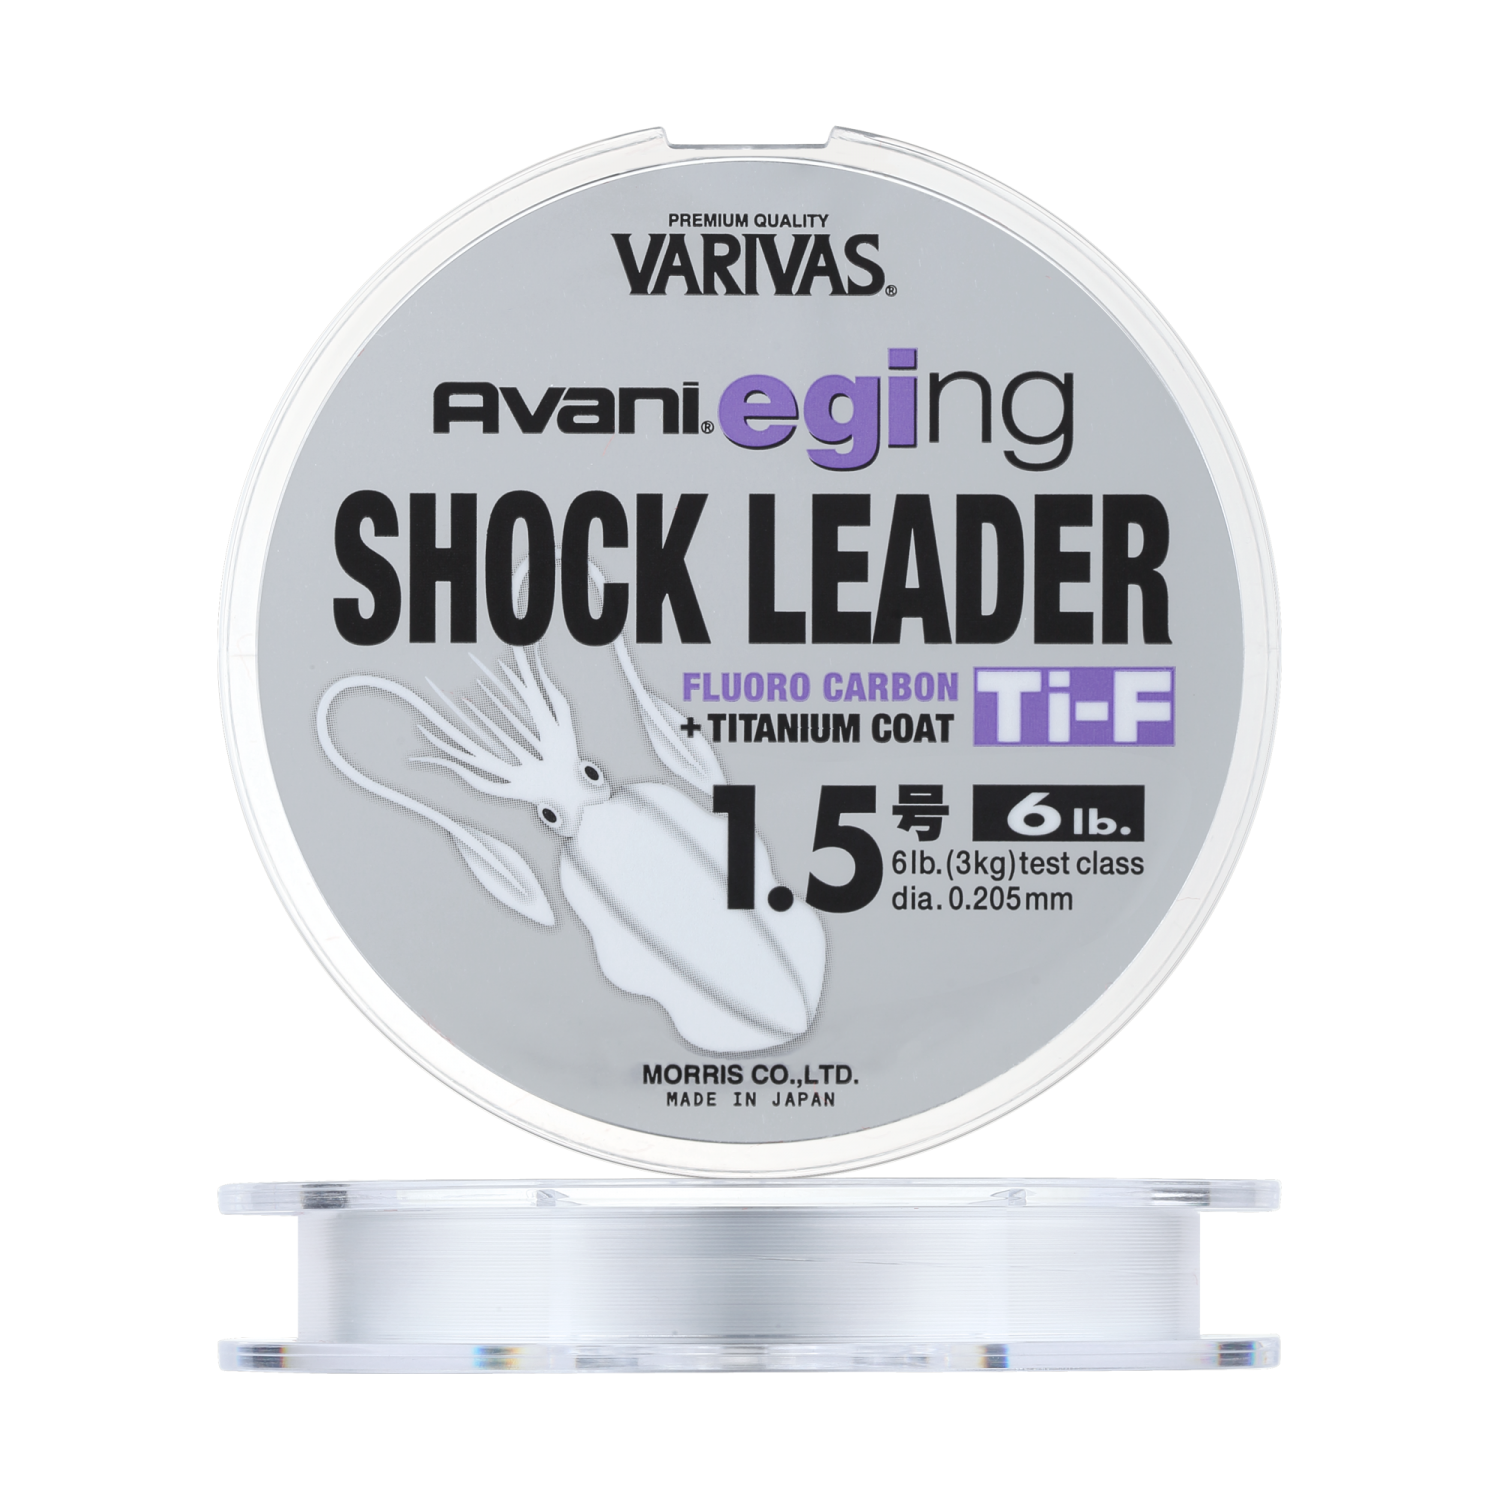 флюорокарбон varivas trout shock leader fluoro разрывная нагрузка 2 25 кг диаметр 0 165 мм Флюорокарбон Varivas Avani Eging Shock Leader Ti Fluoro Carbon #1,5 0,205мм 30м (clear)